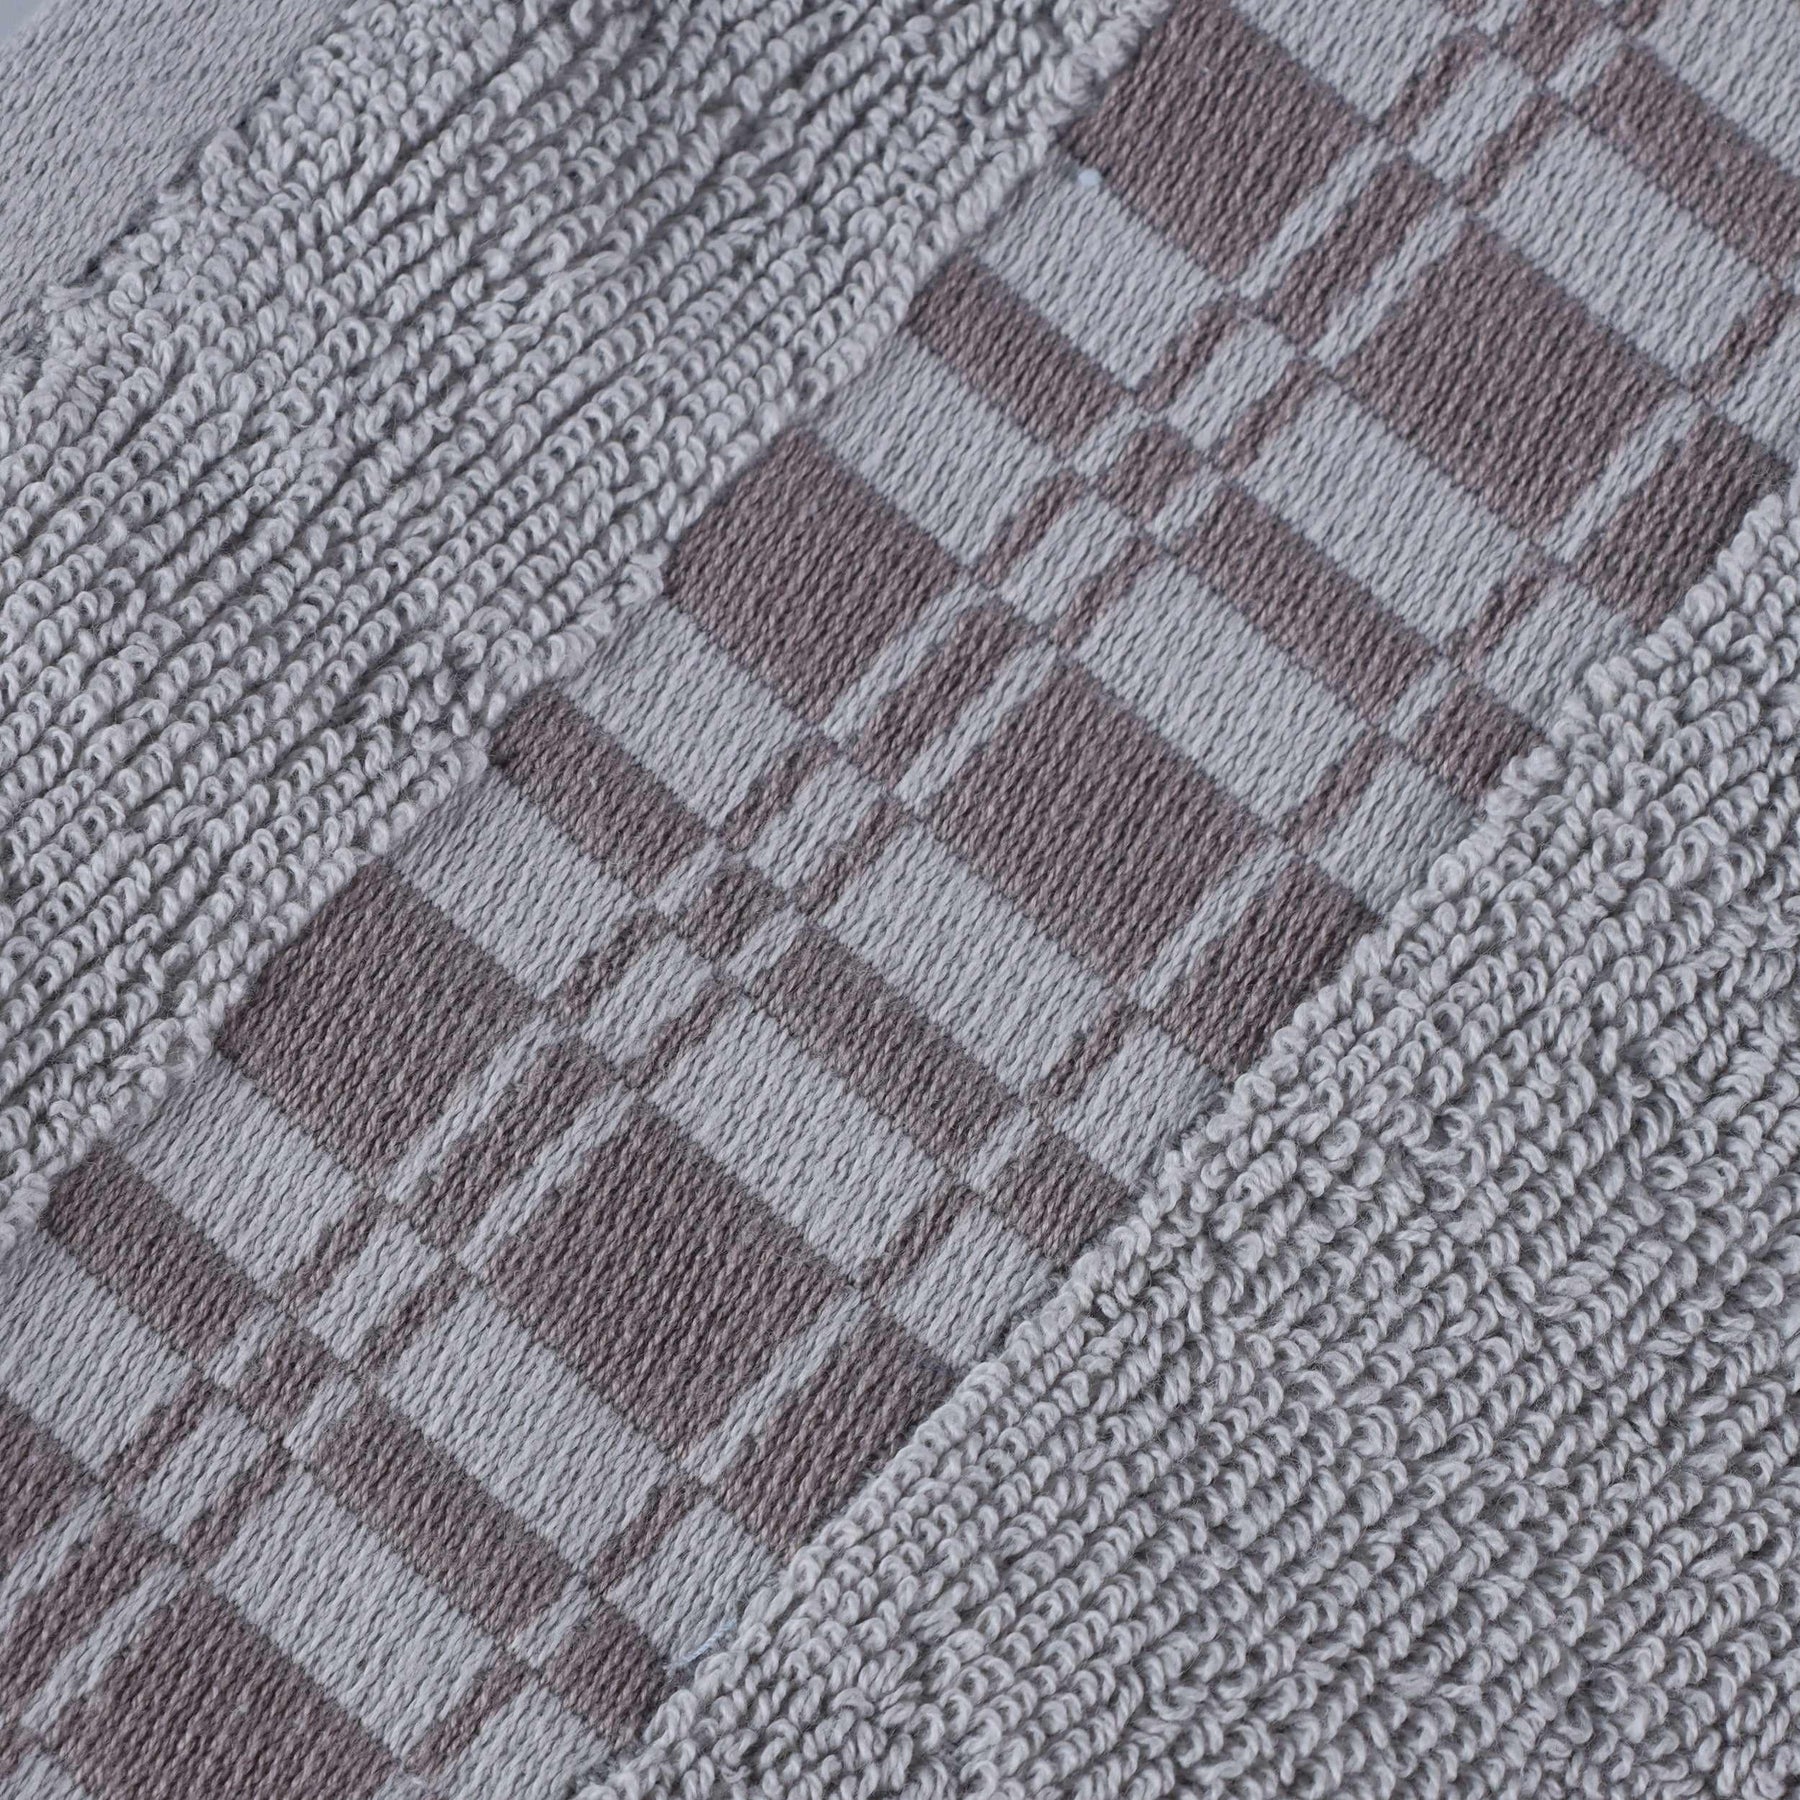  Superior Larissa Cotton 4-Piece Bath Towel Set with Geometric Embroidered Jacquard Border - grey